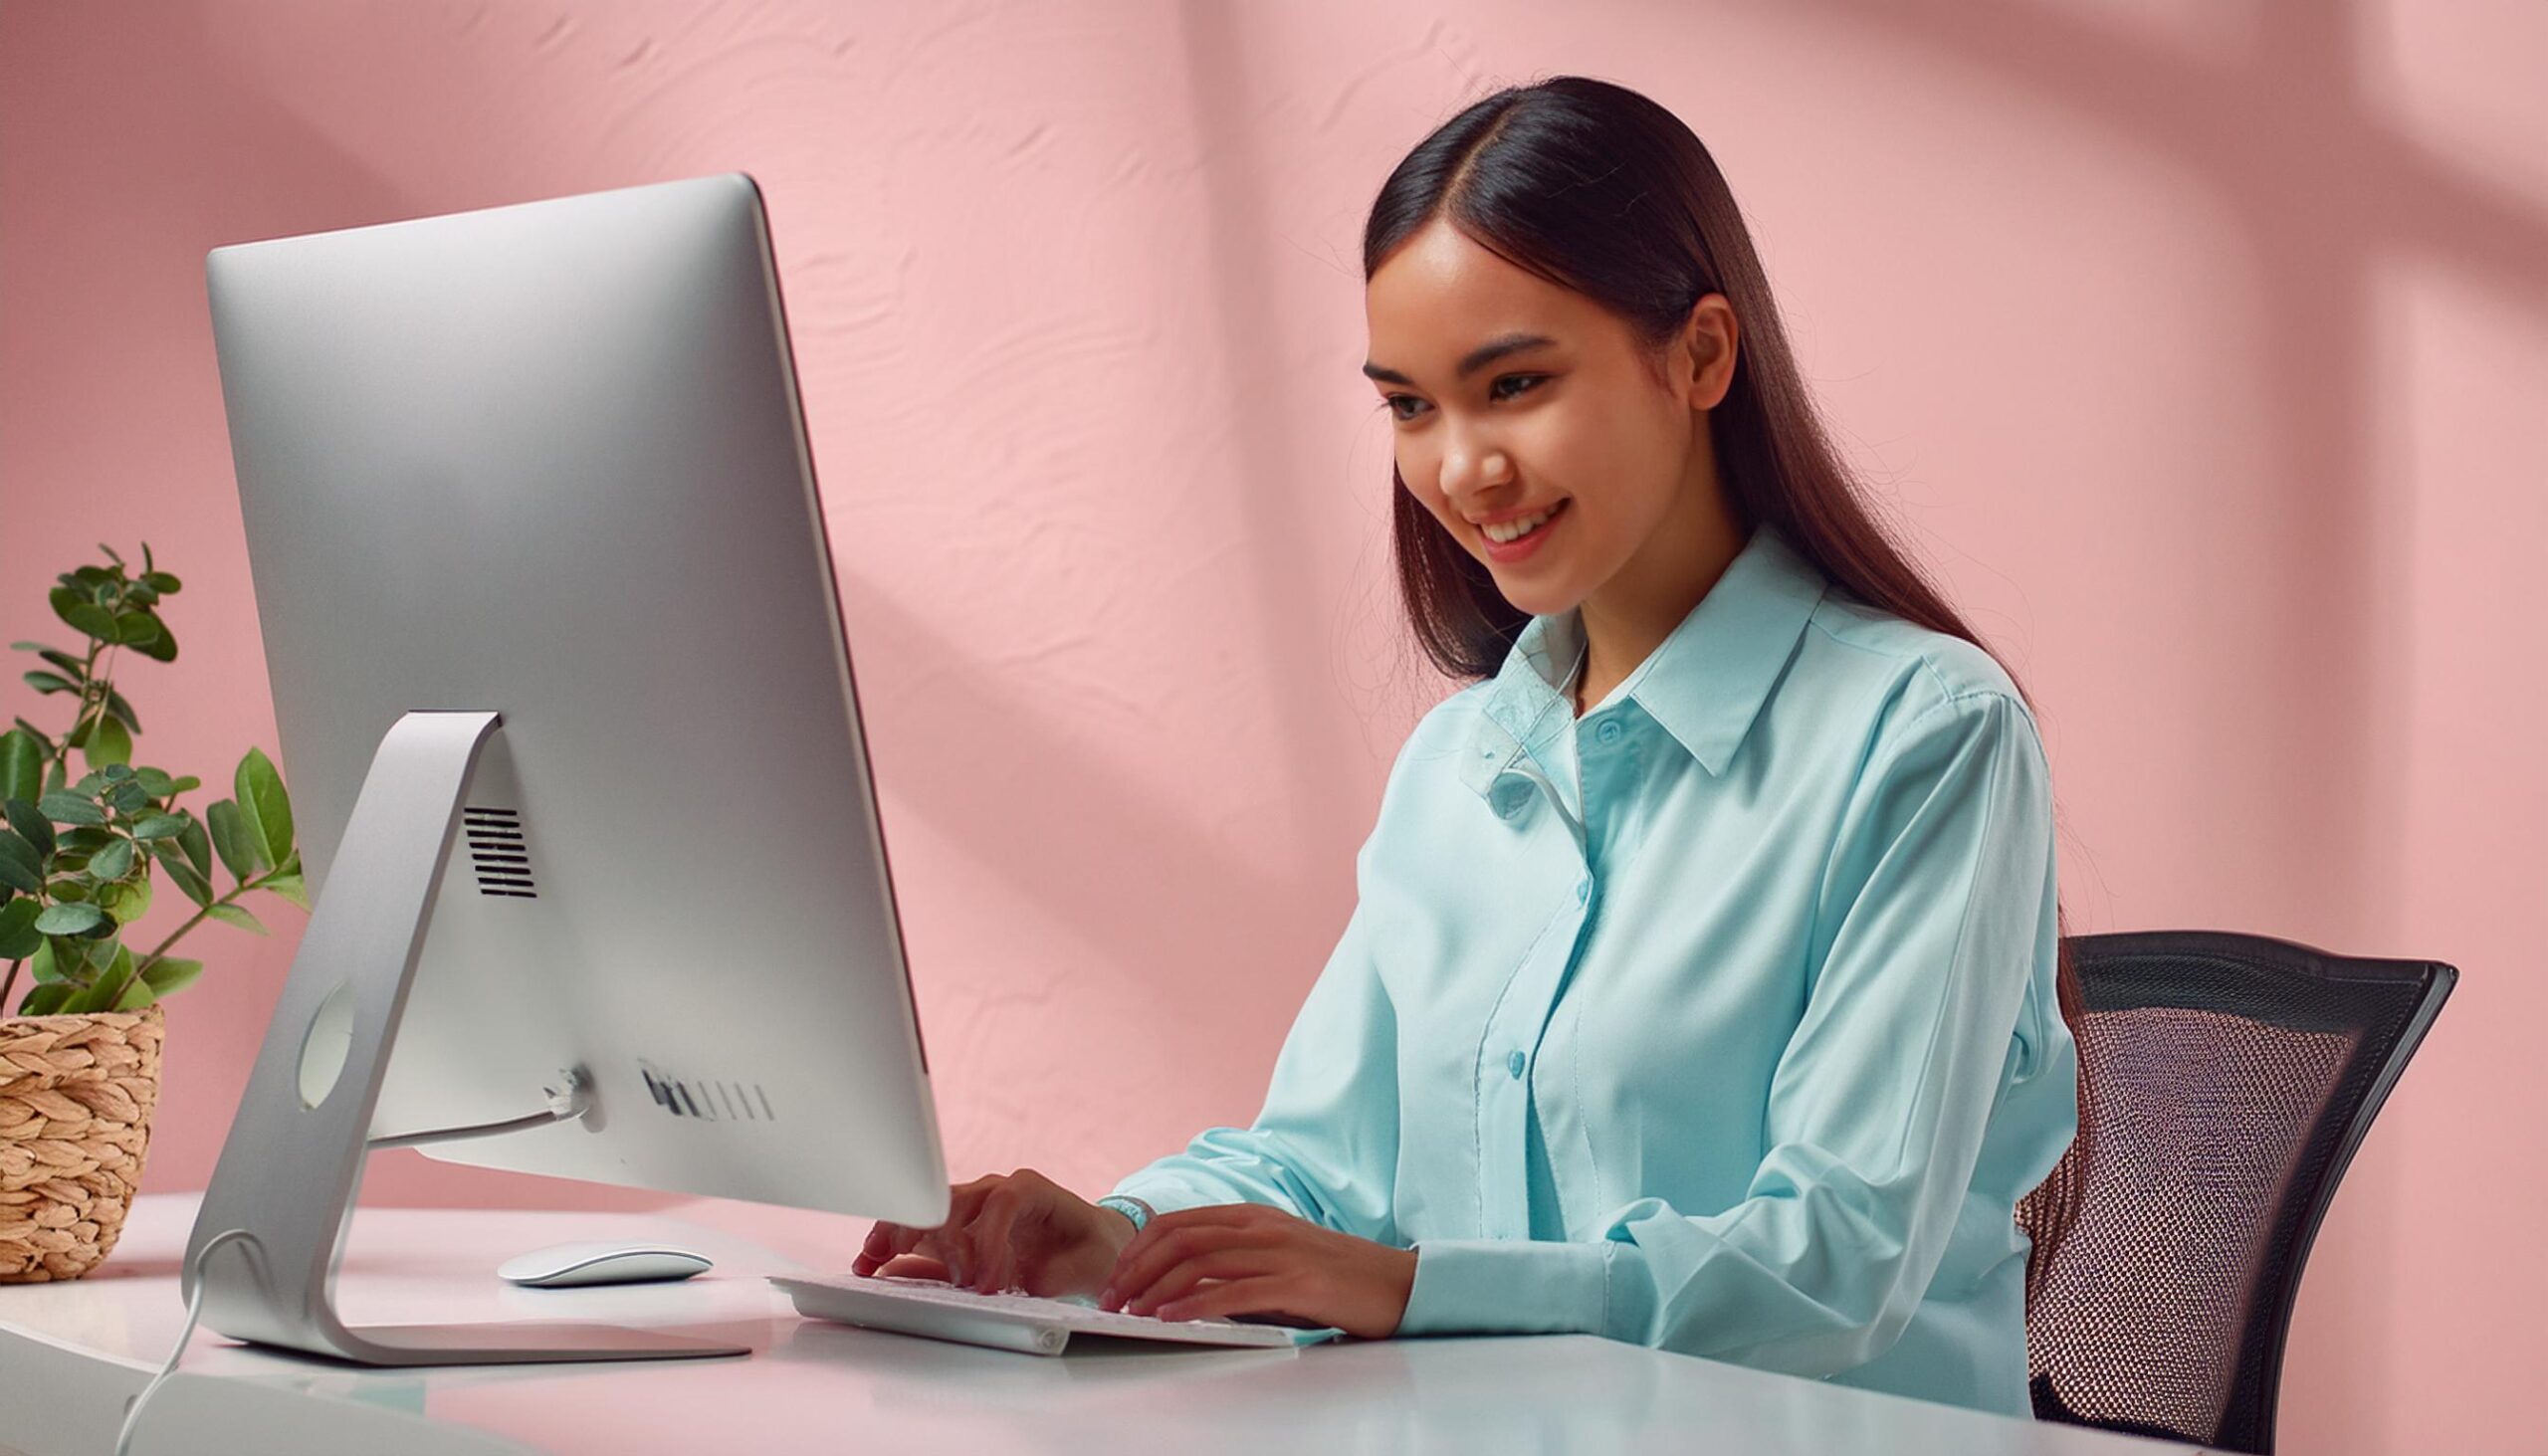 Meta Beschreibung: Asiatische Frau am Computer